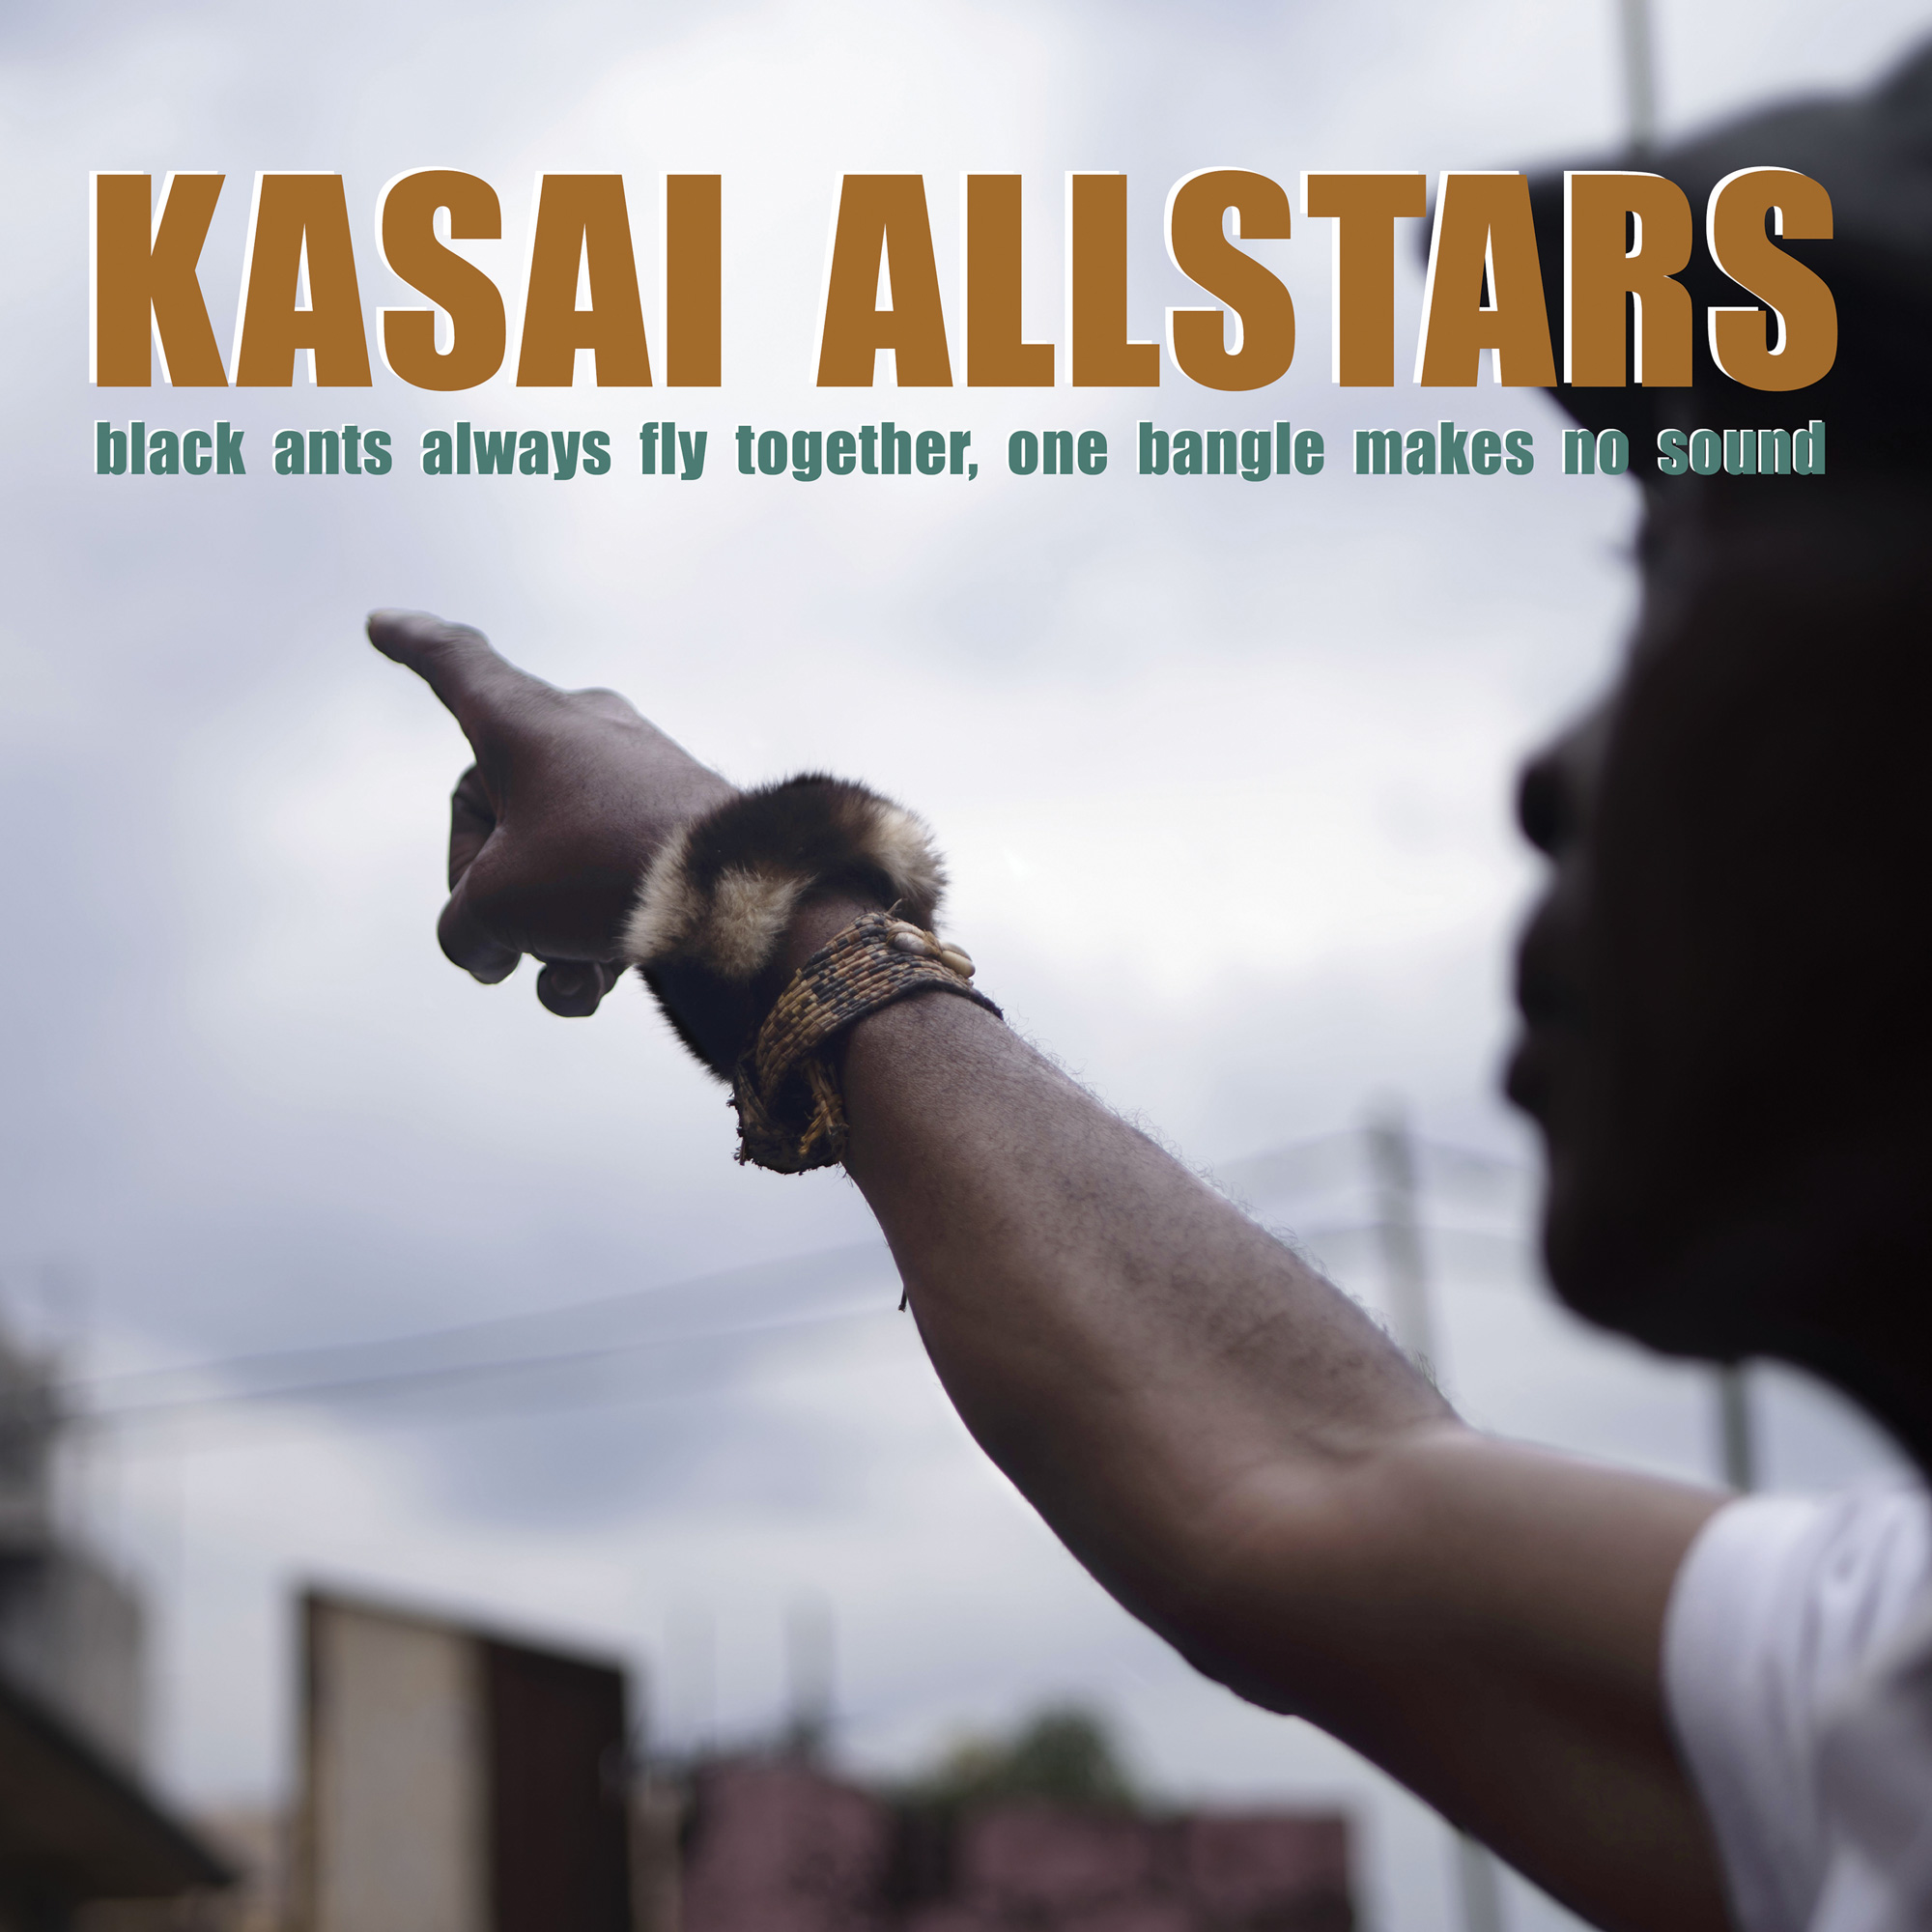 KASAI ALLSTARS - black ants always fly together, one bangle makes no sound (album)